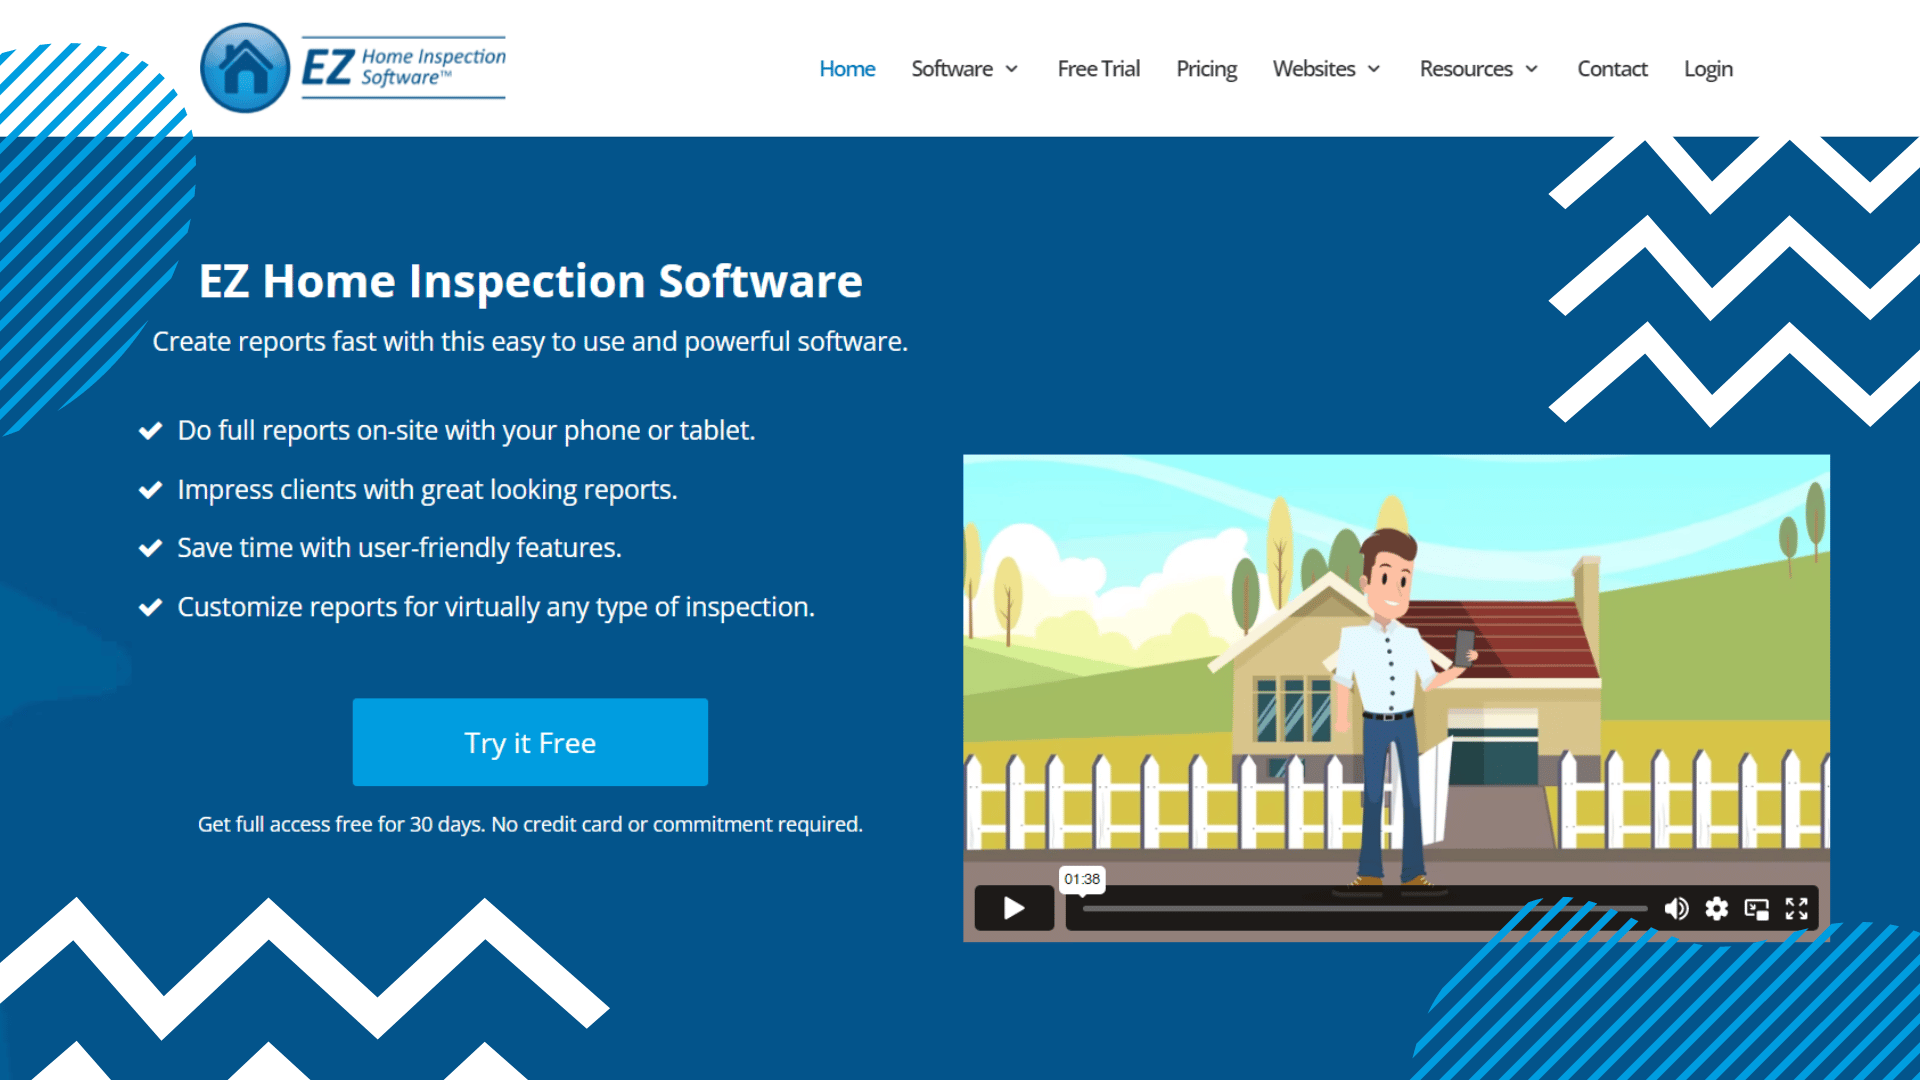 EZ Home Inspection Software Features